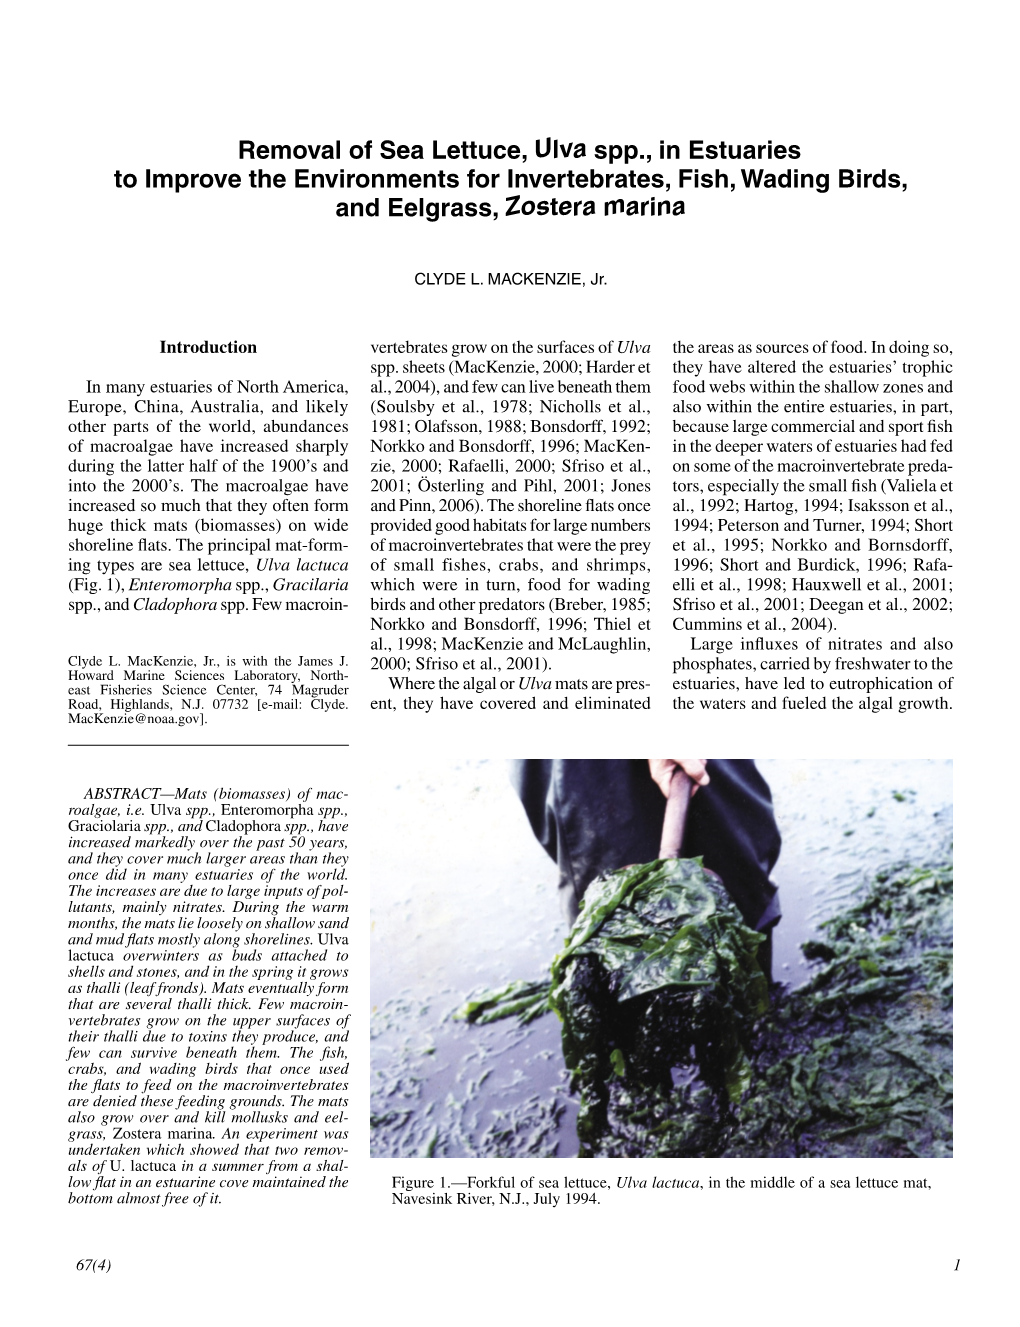 Removal of Sea Lettuce, Ulva Spp., in Estuaries to Improve the Environments for Invertebrates, Fish, Wading Birds, and Eelgrass, Zostera Marina